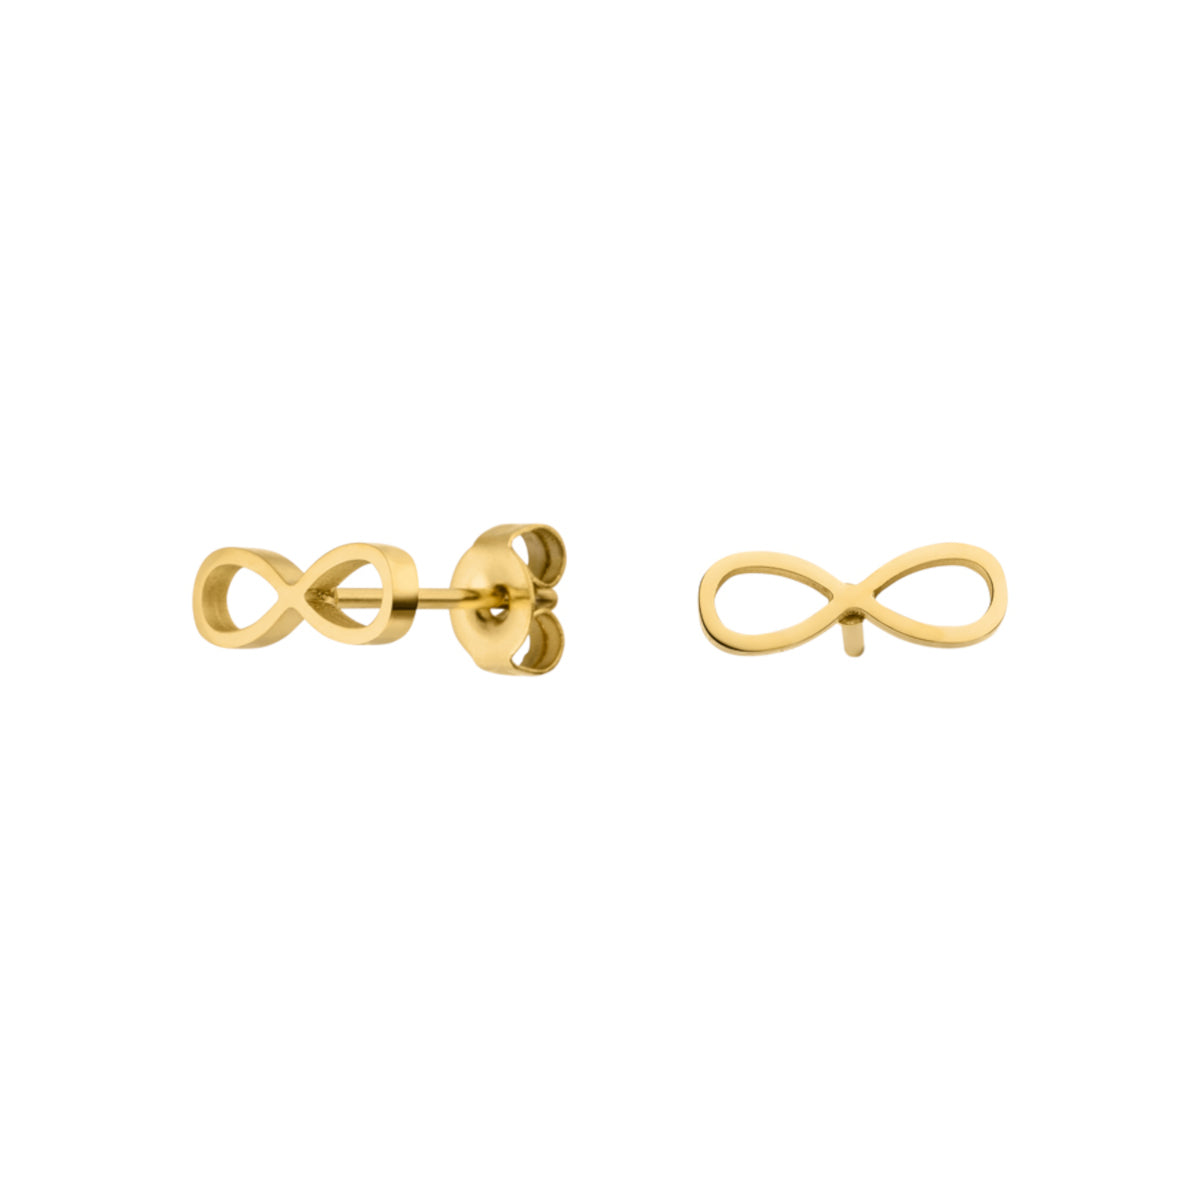 Vergoldete Ohrringe mit Infinity Motiv aus Edelstahl